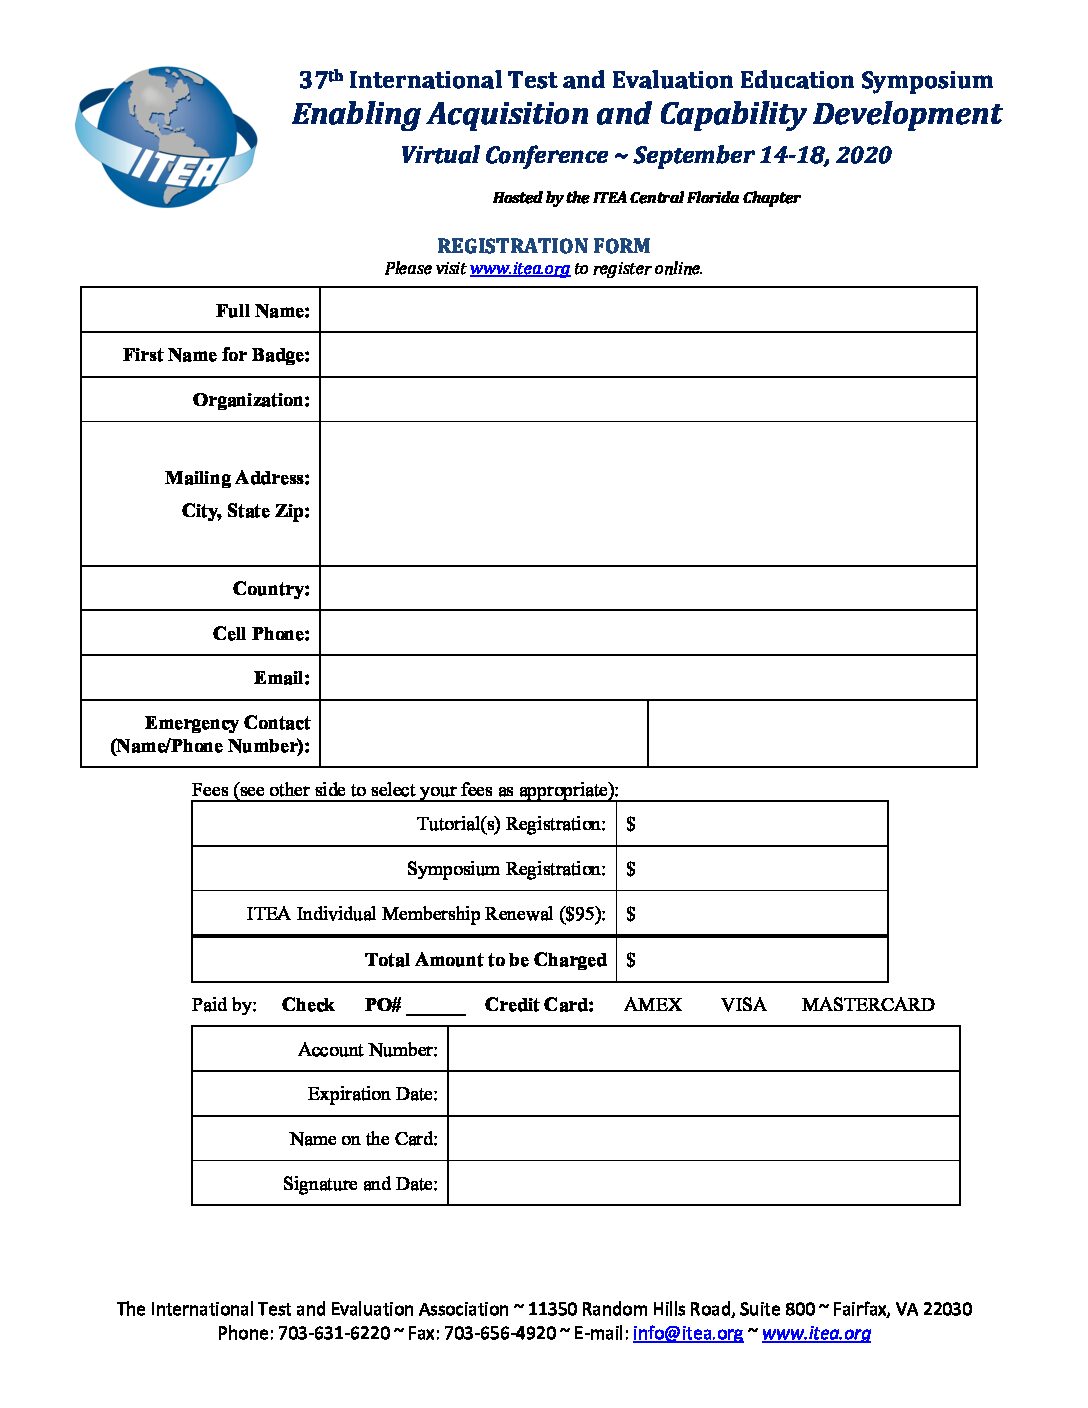 2020 Symposium Registration Form